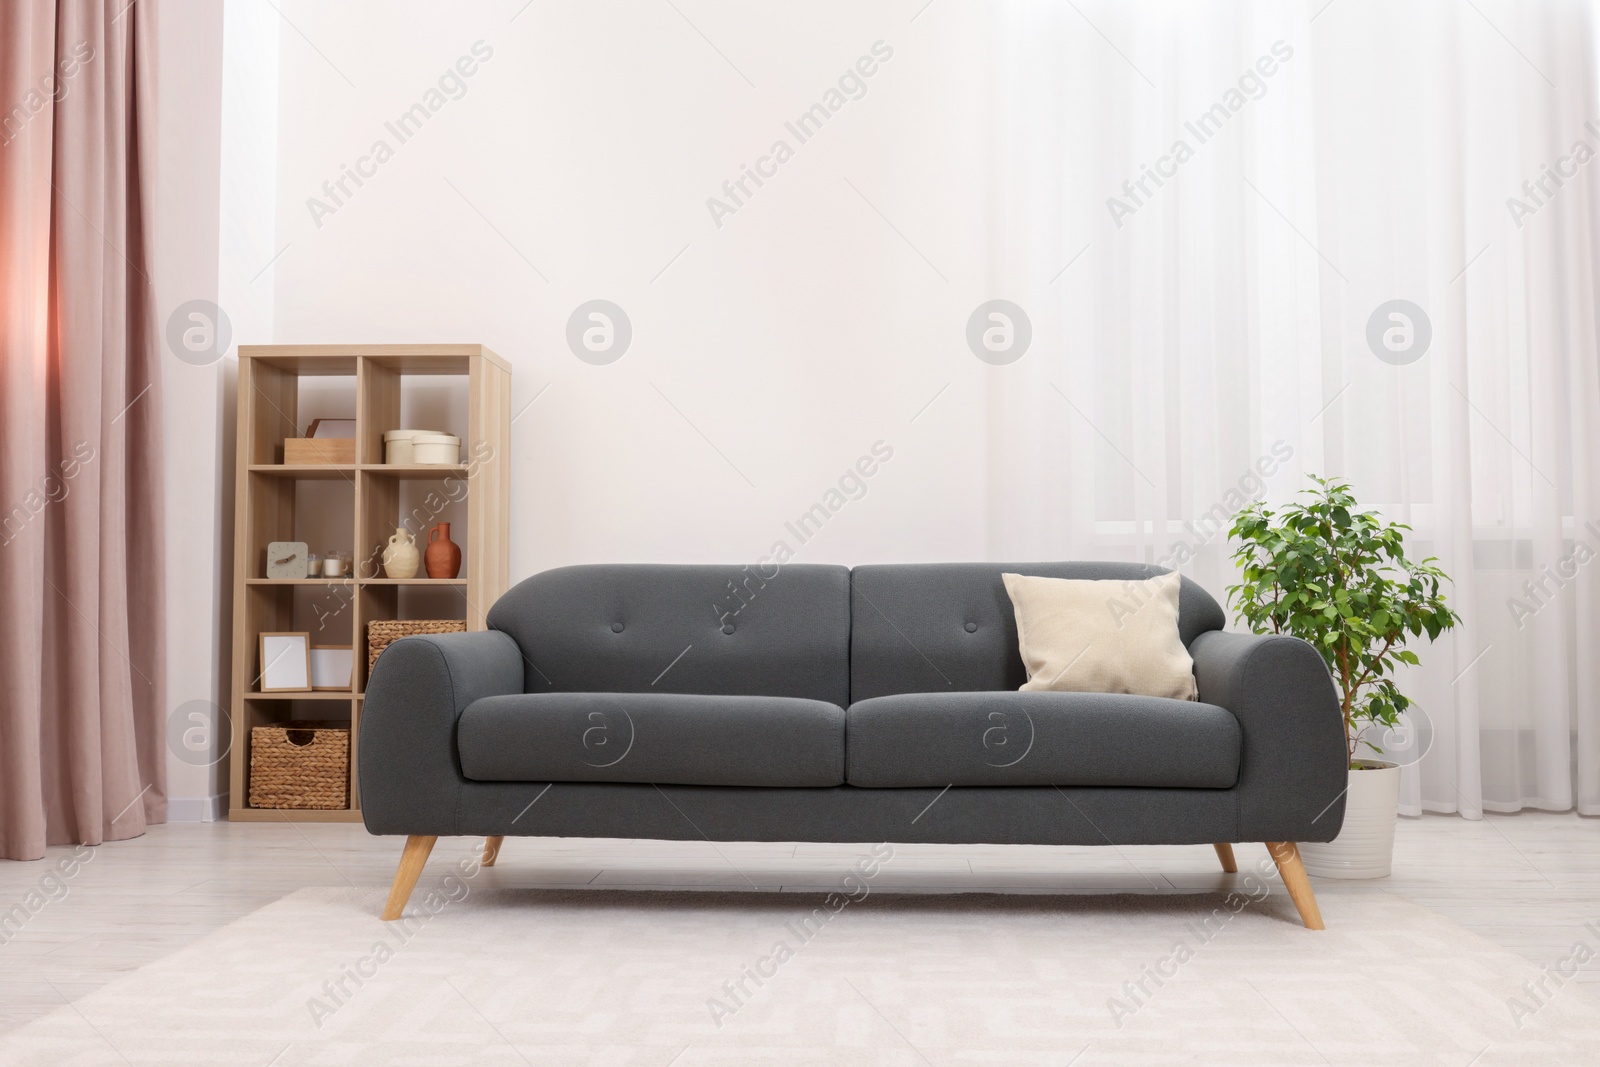 Photo of Stylish sofa and houseplant in room. Interior design